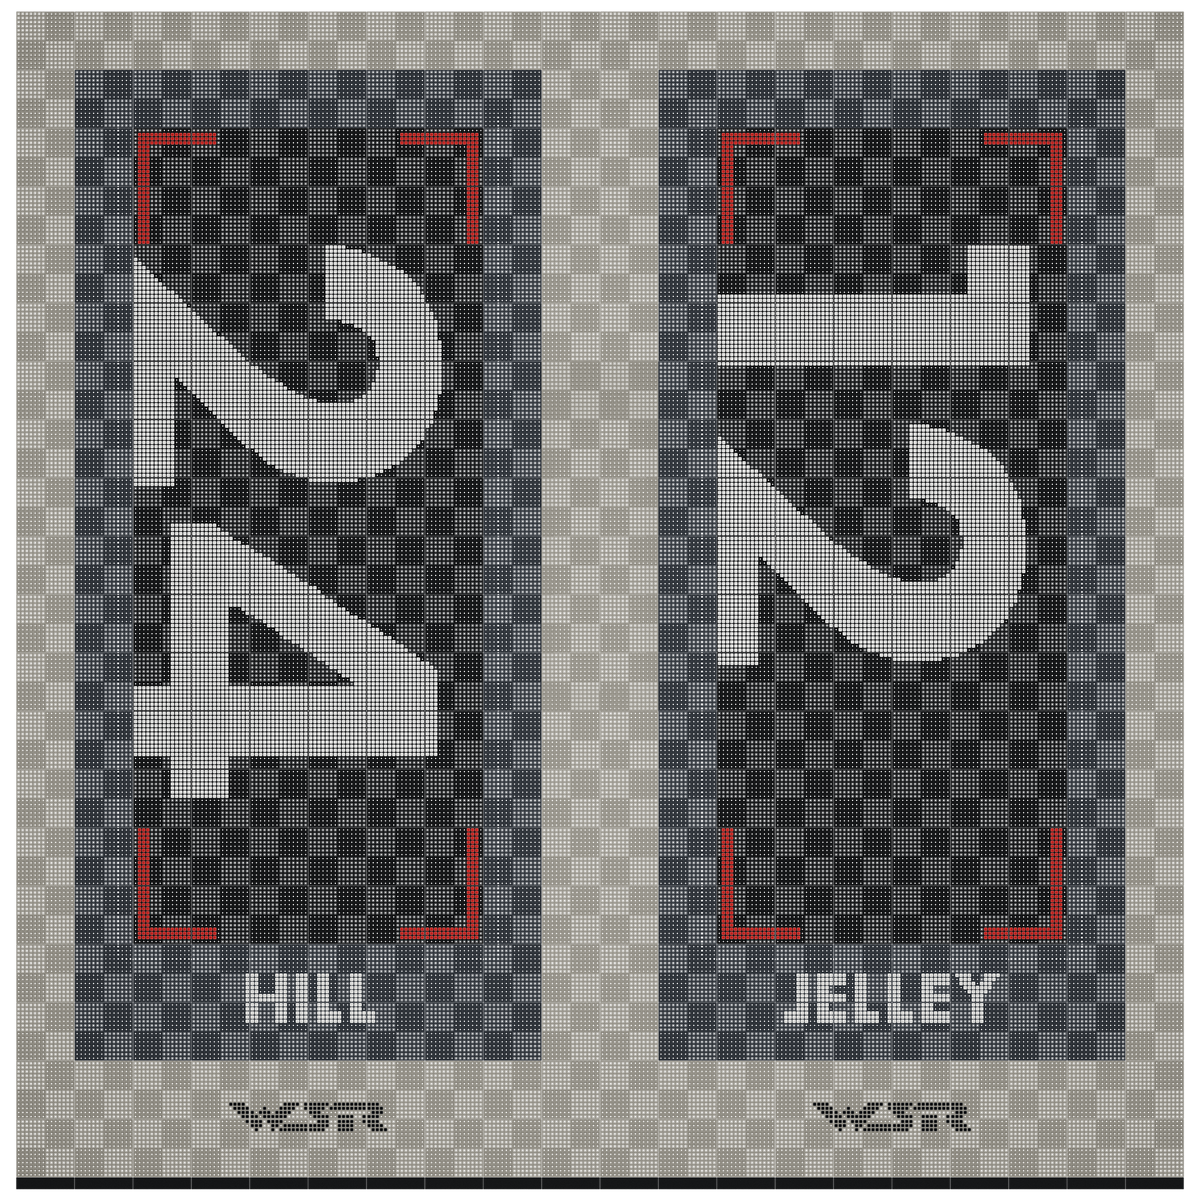 West Surrey Racing - Jake Hill and Stephen Jelley - Double Garage Floor Pack Garage Flooring Pack versodeck